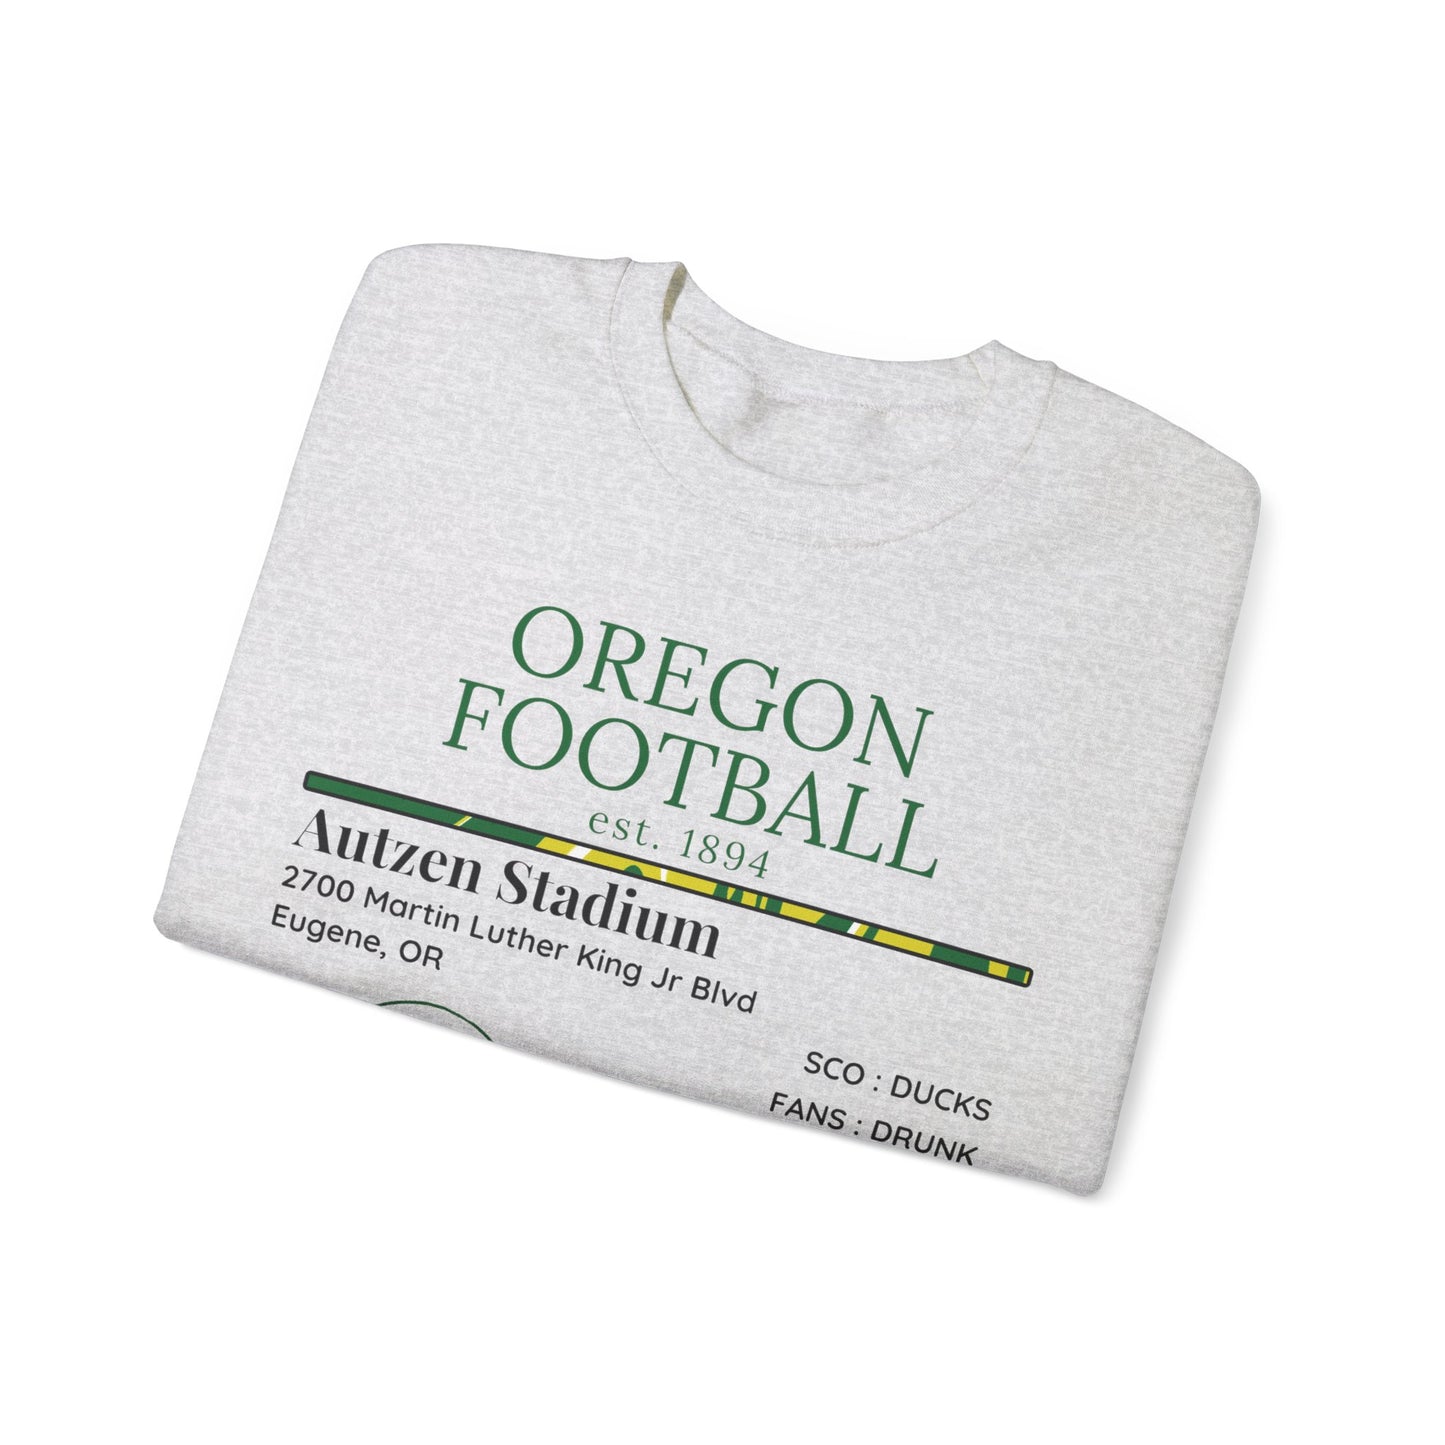 Oregon Football Sweatshirt